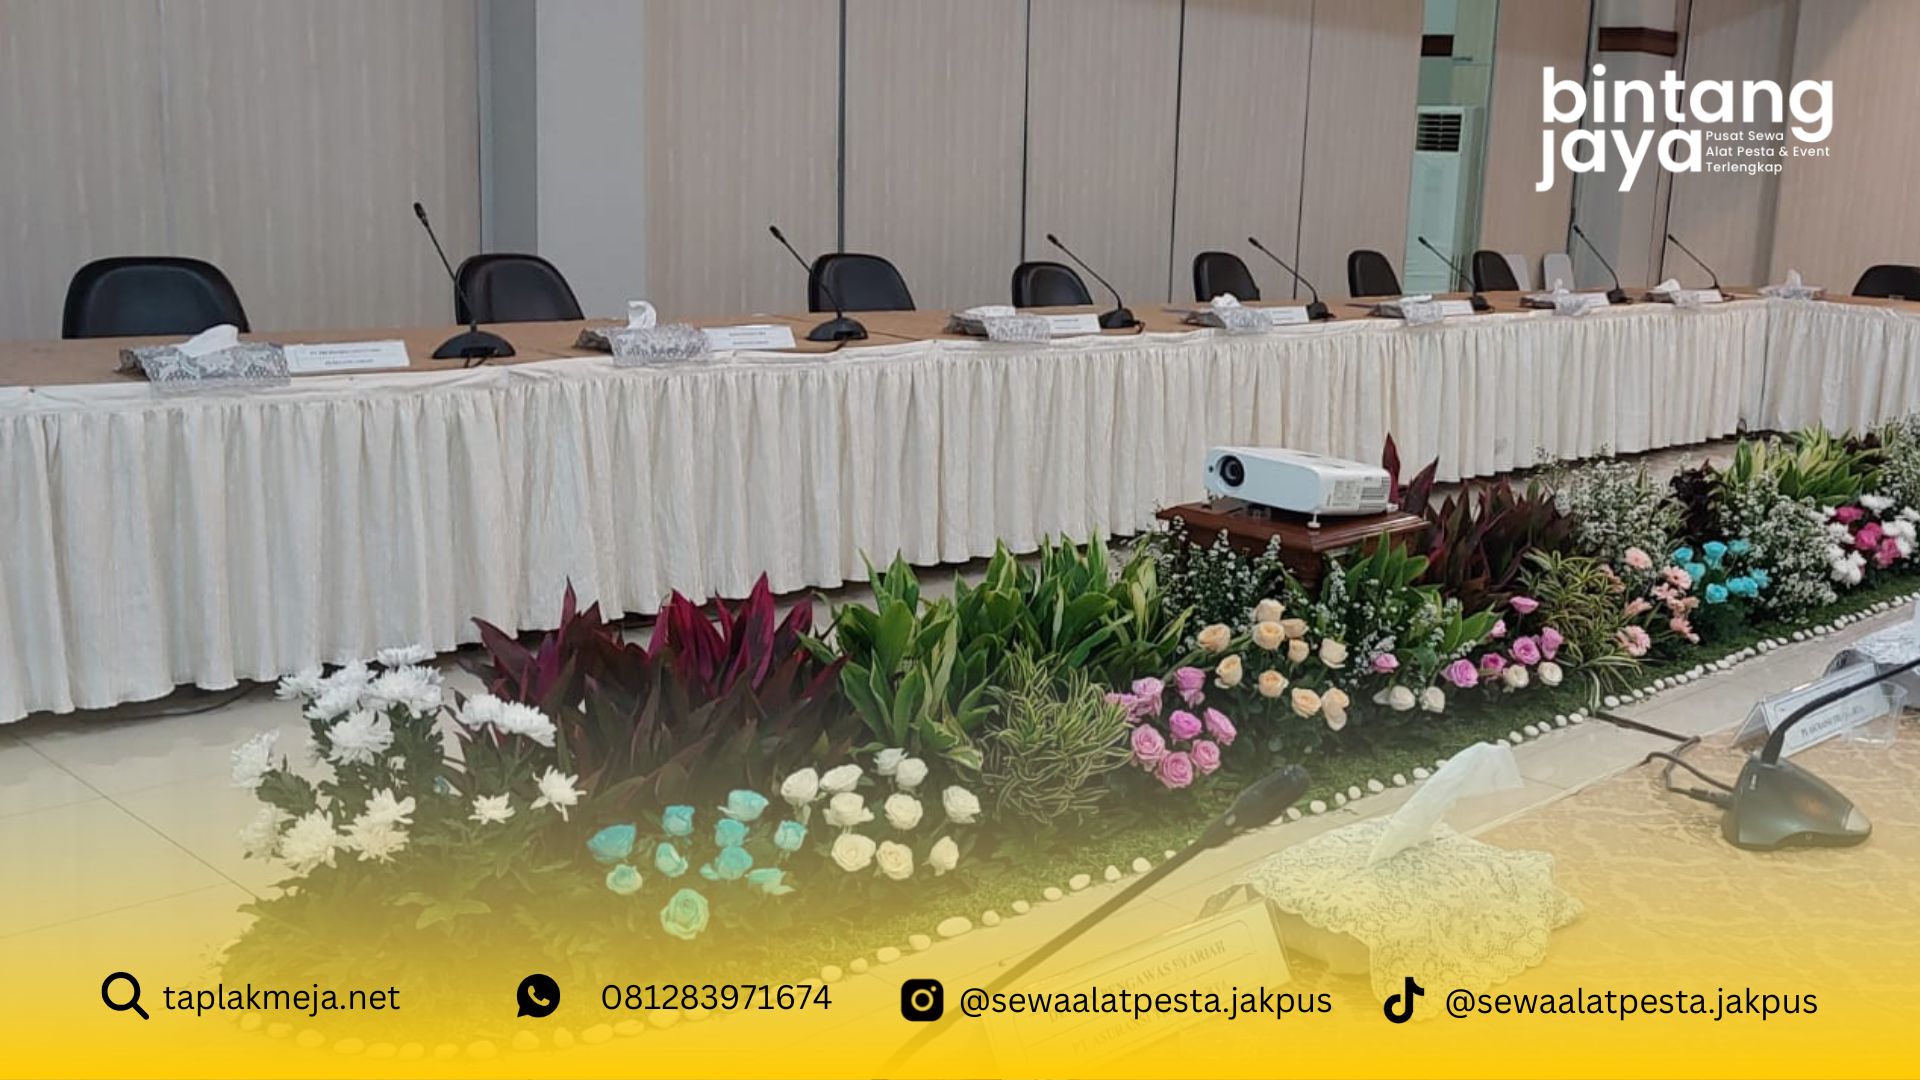 Jasa Jahit Taplak Meja Skirting Prasmanan di Mustika Jaya Bekasi